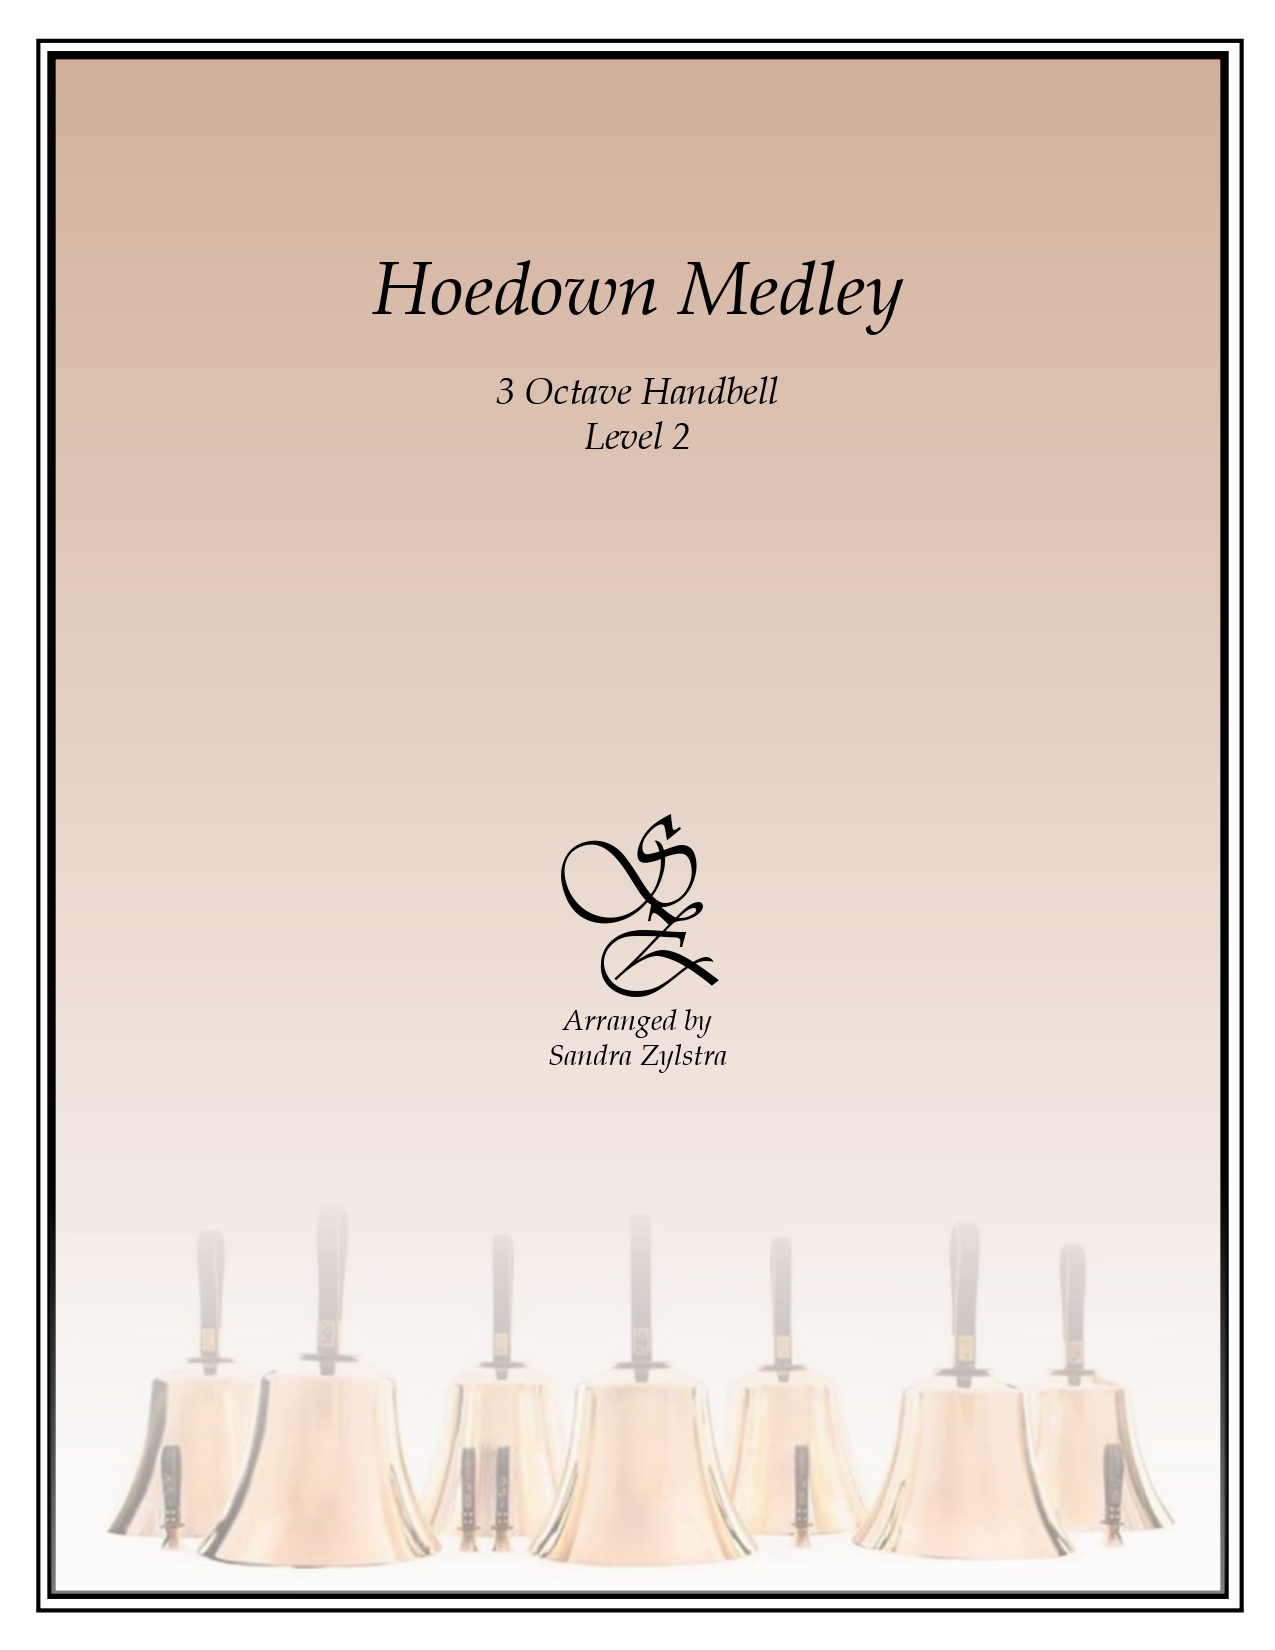 Hoedown Medley 3 octave handbells cover page 00011